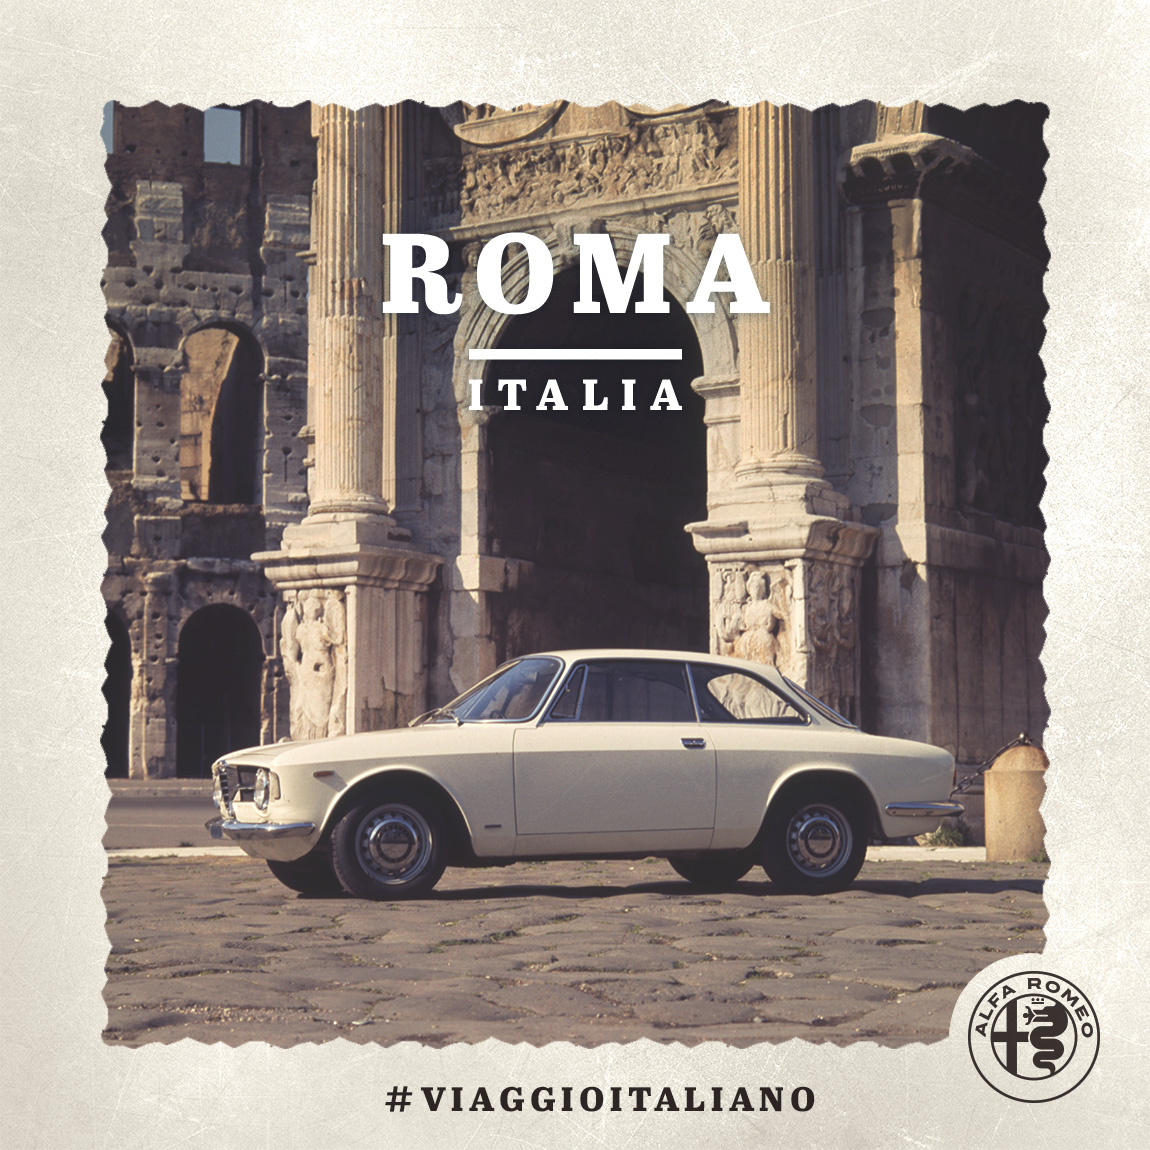 Image of an Alfa Romeo car in Rome